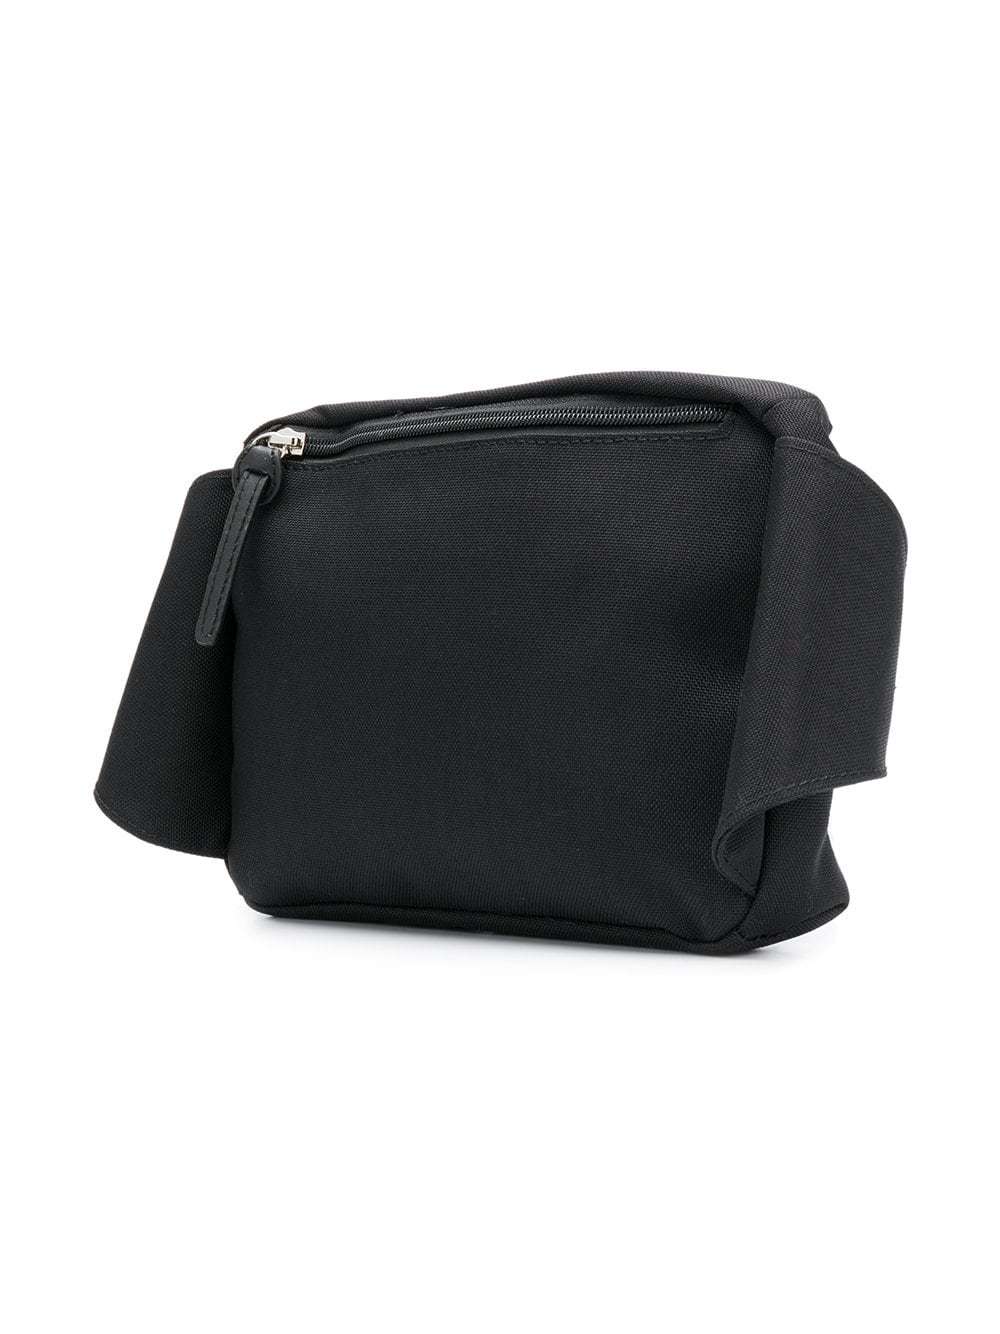 Buy Marcelo Burlon Black Logo PVC Clutch Bag at Ubuy India